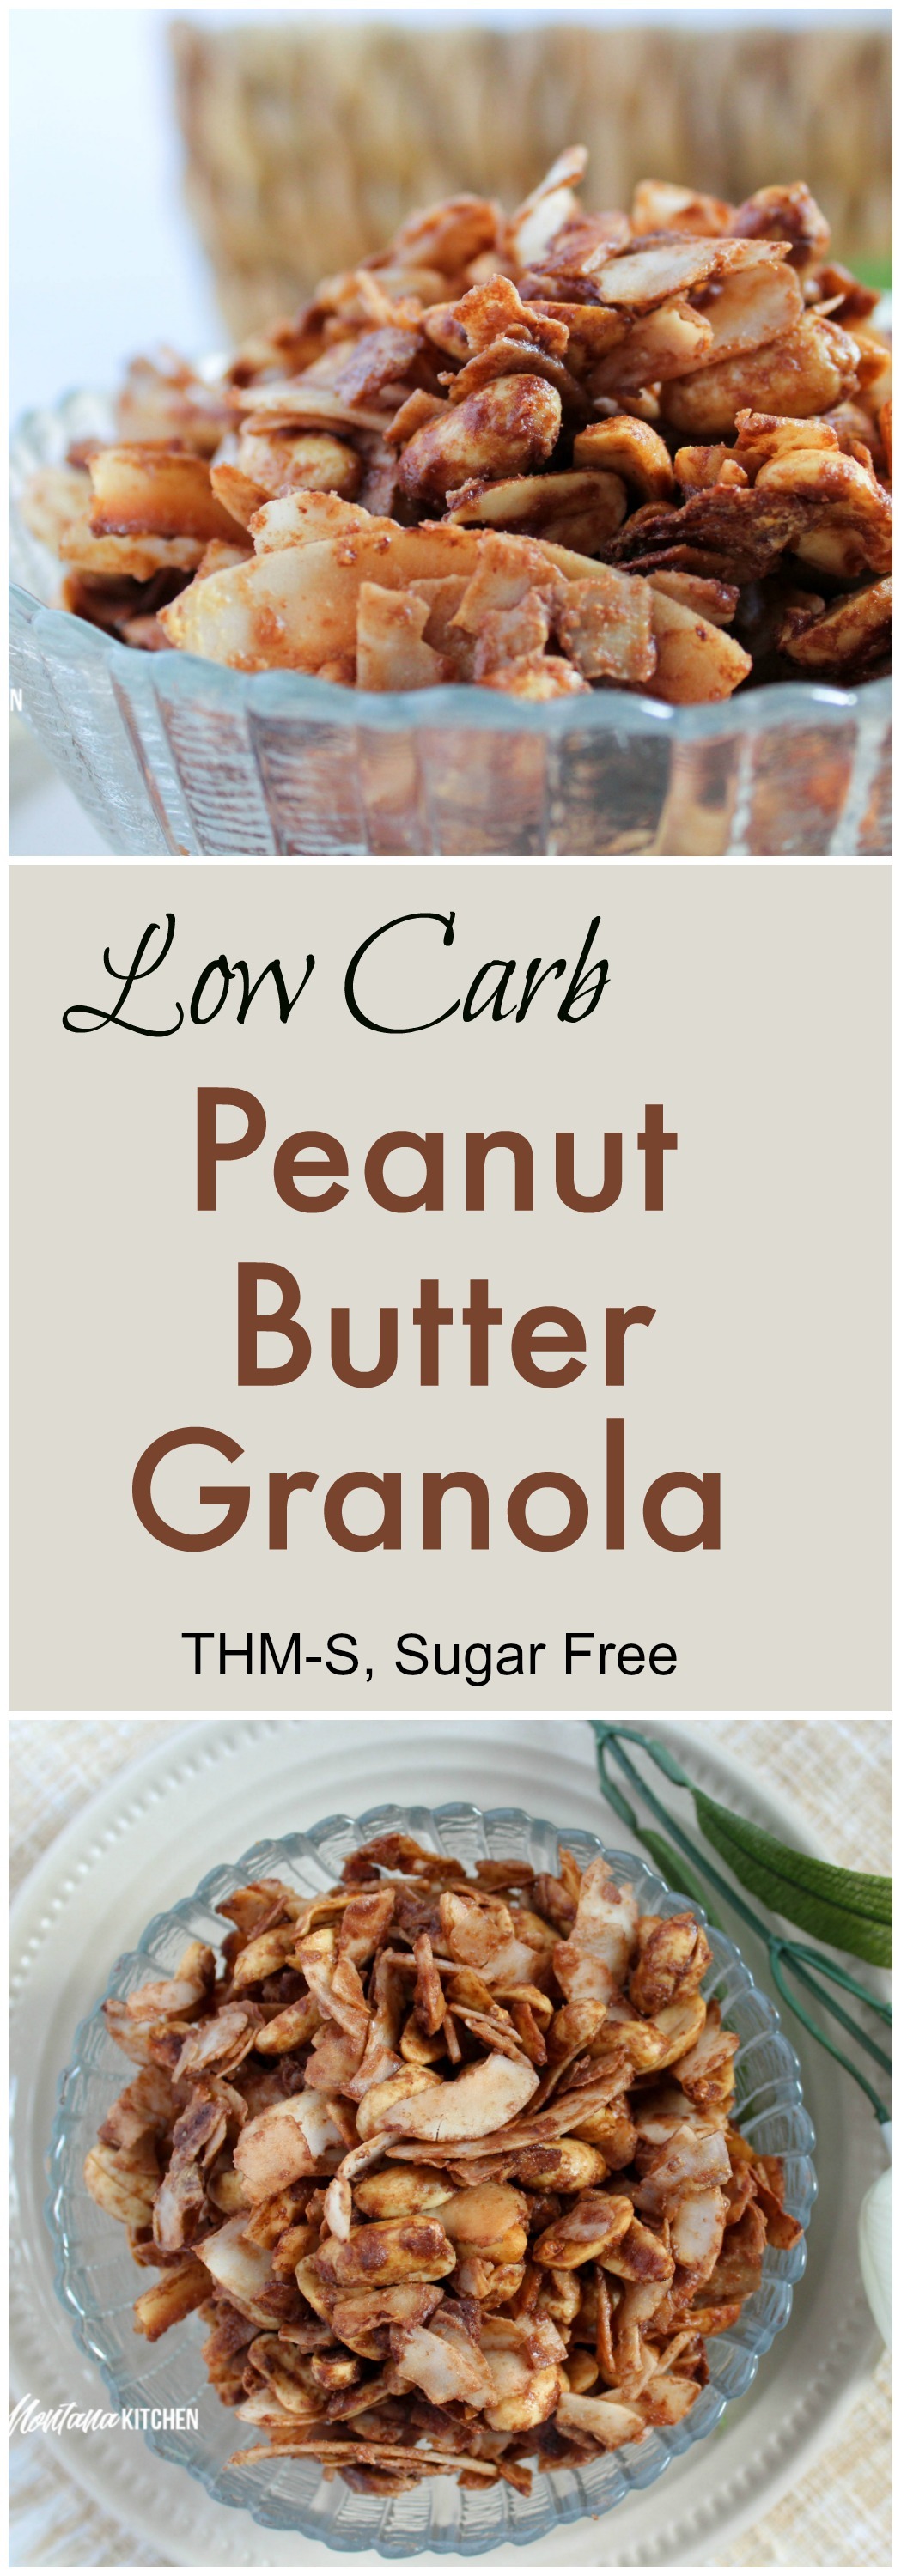 Low Carb Peanut Butter Granola (THM-S, Sugar Free)